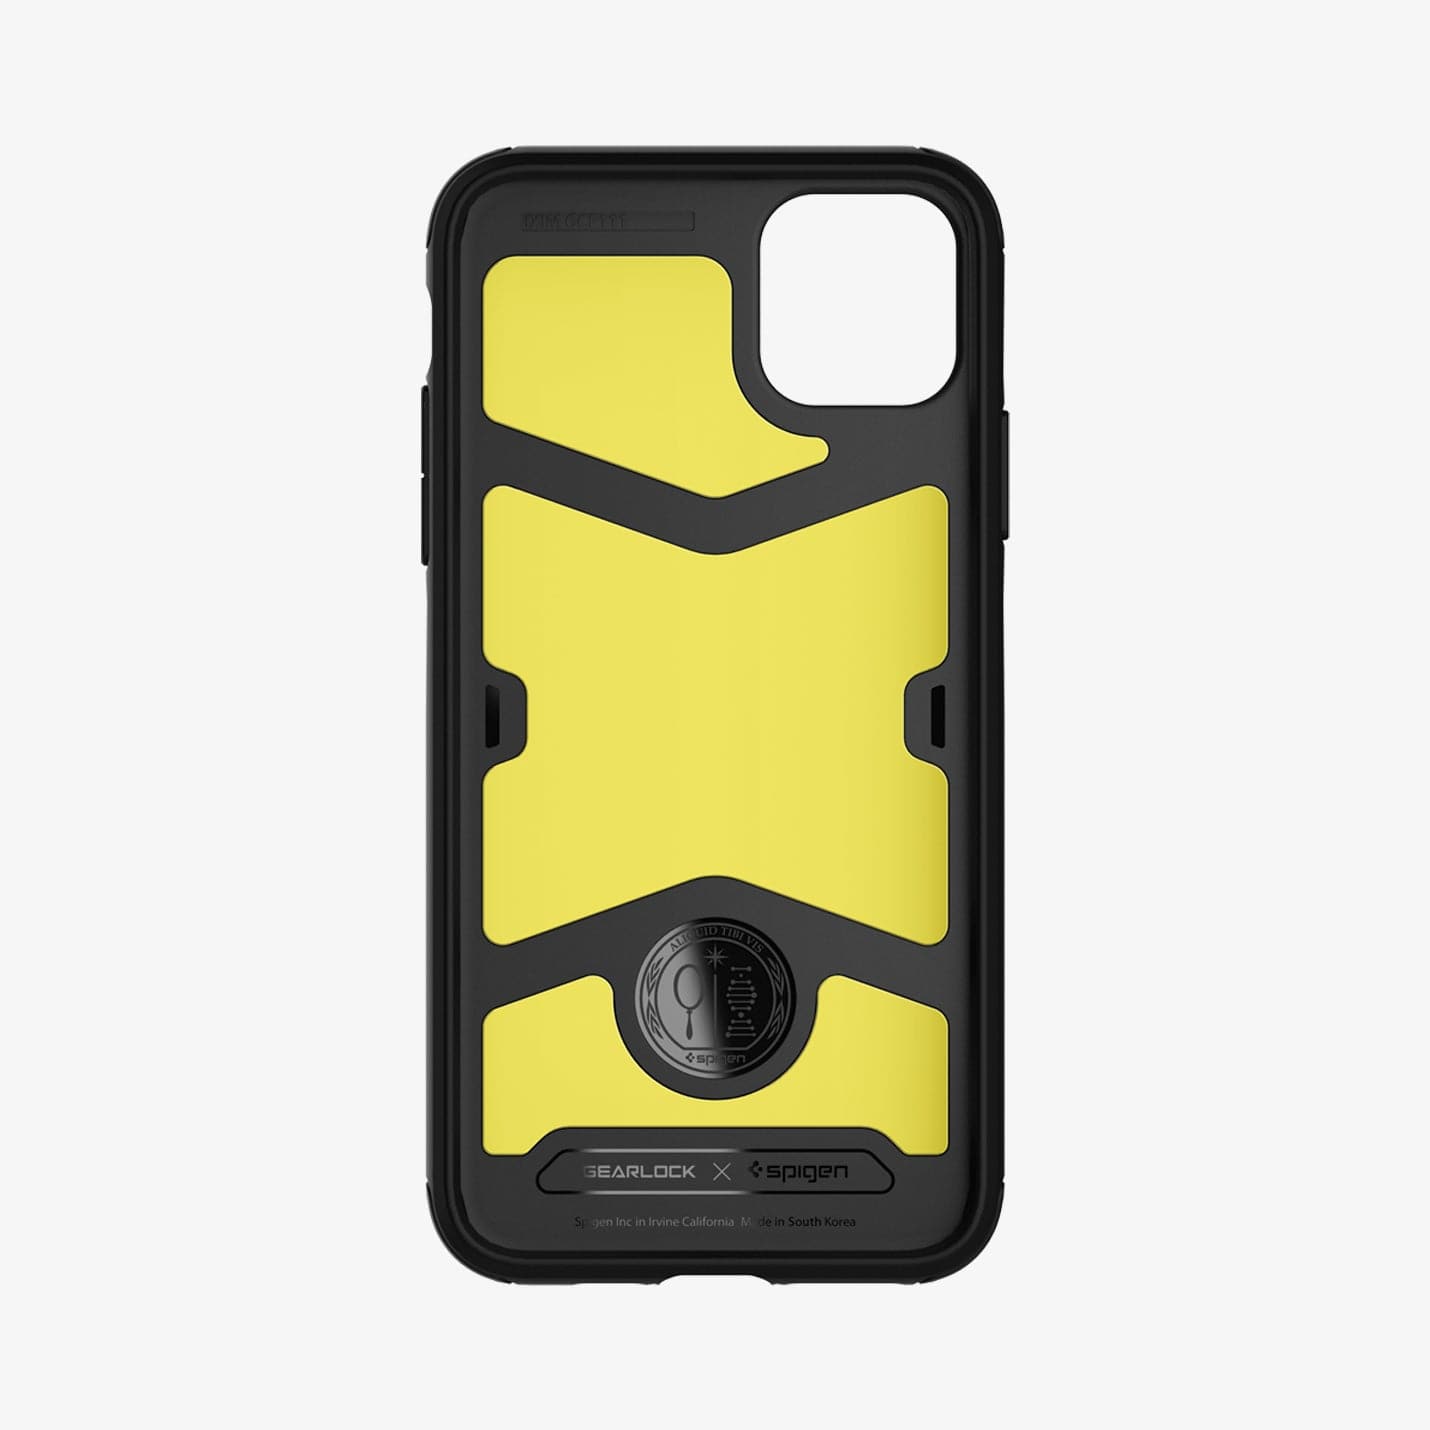 ACS00277 - iPhone 11 Pro Max Case Gearlock Bike Mount in black showing the inside of case